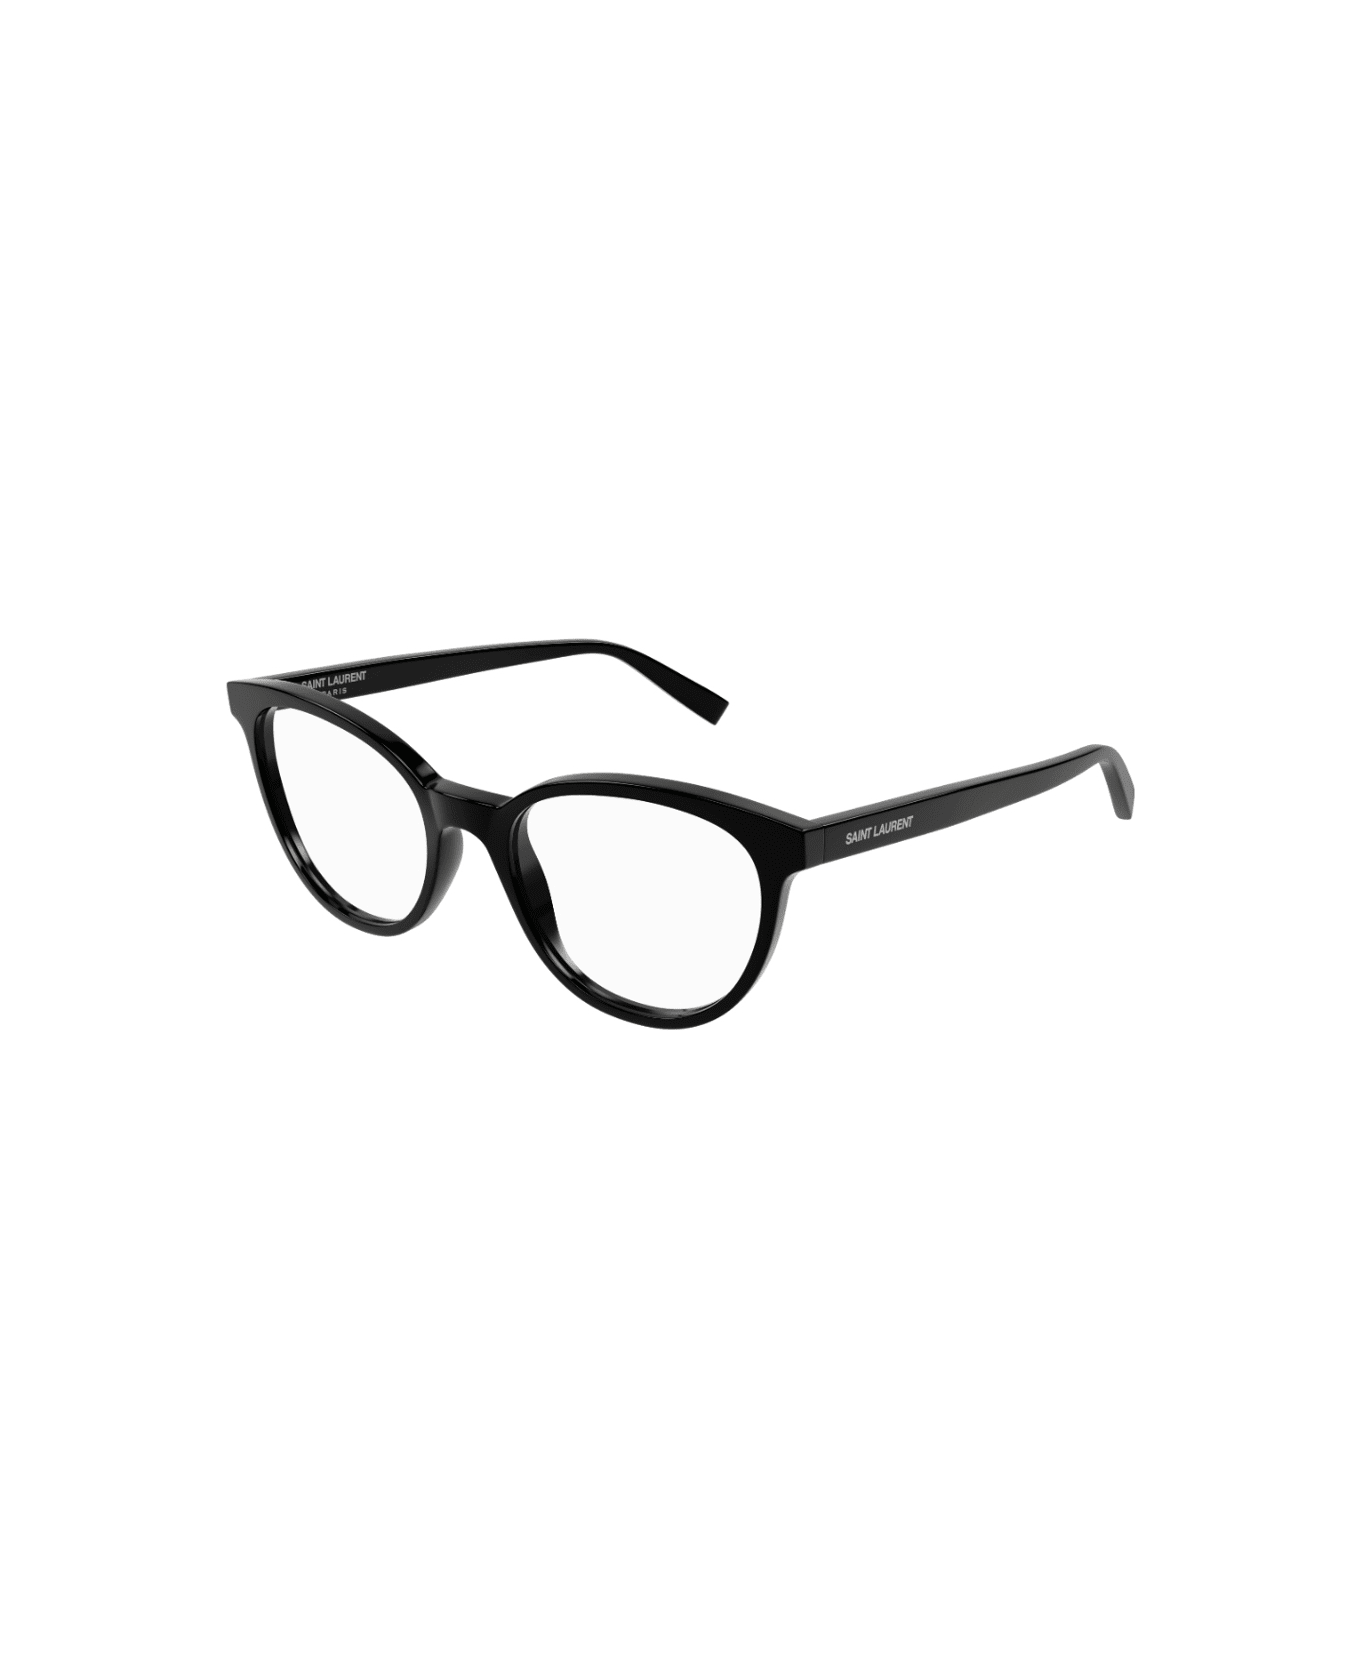 Saint Laurent Eyewear SL 589 001 Glasses